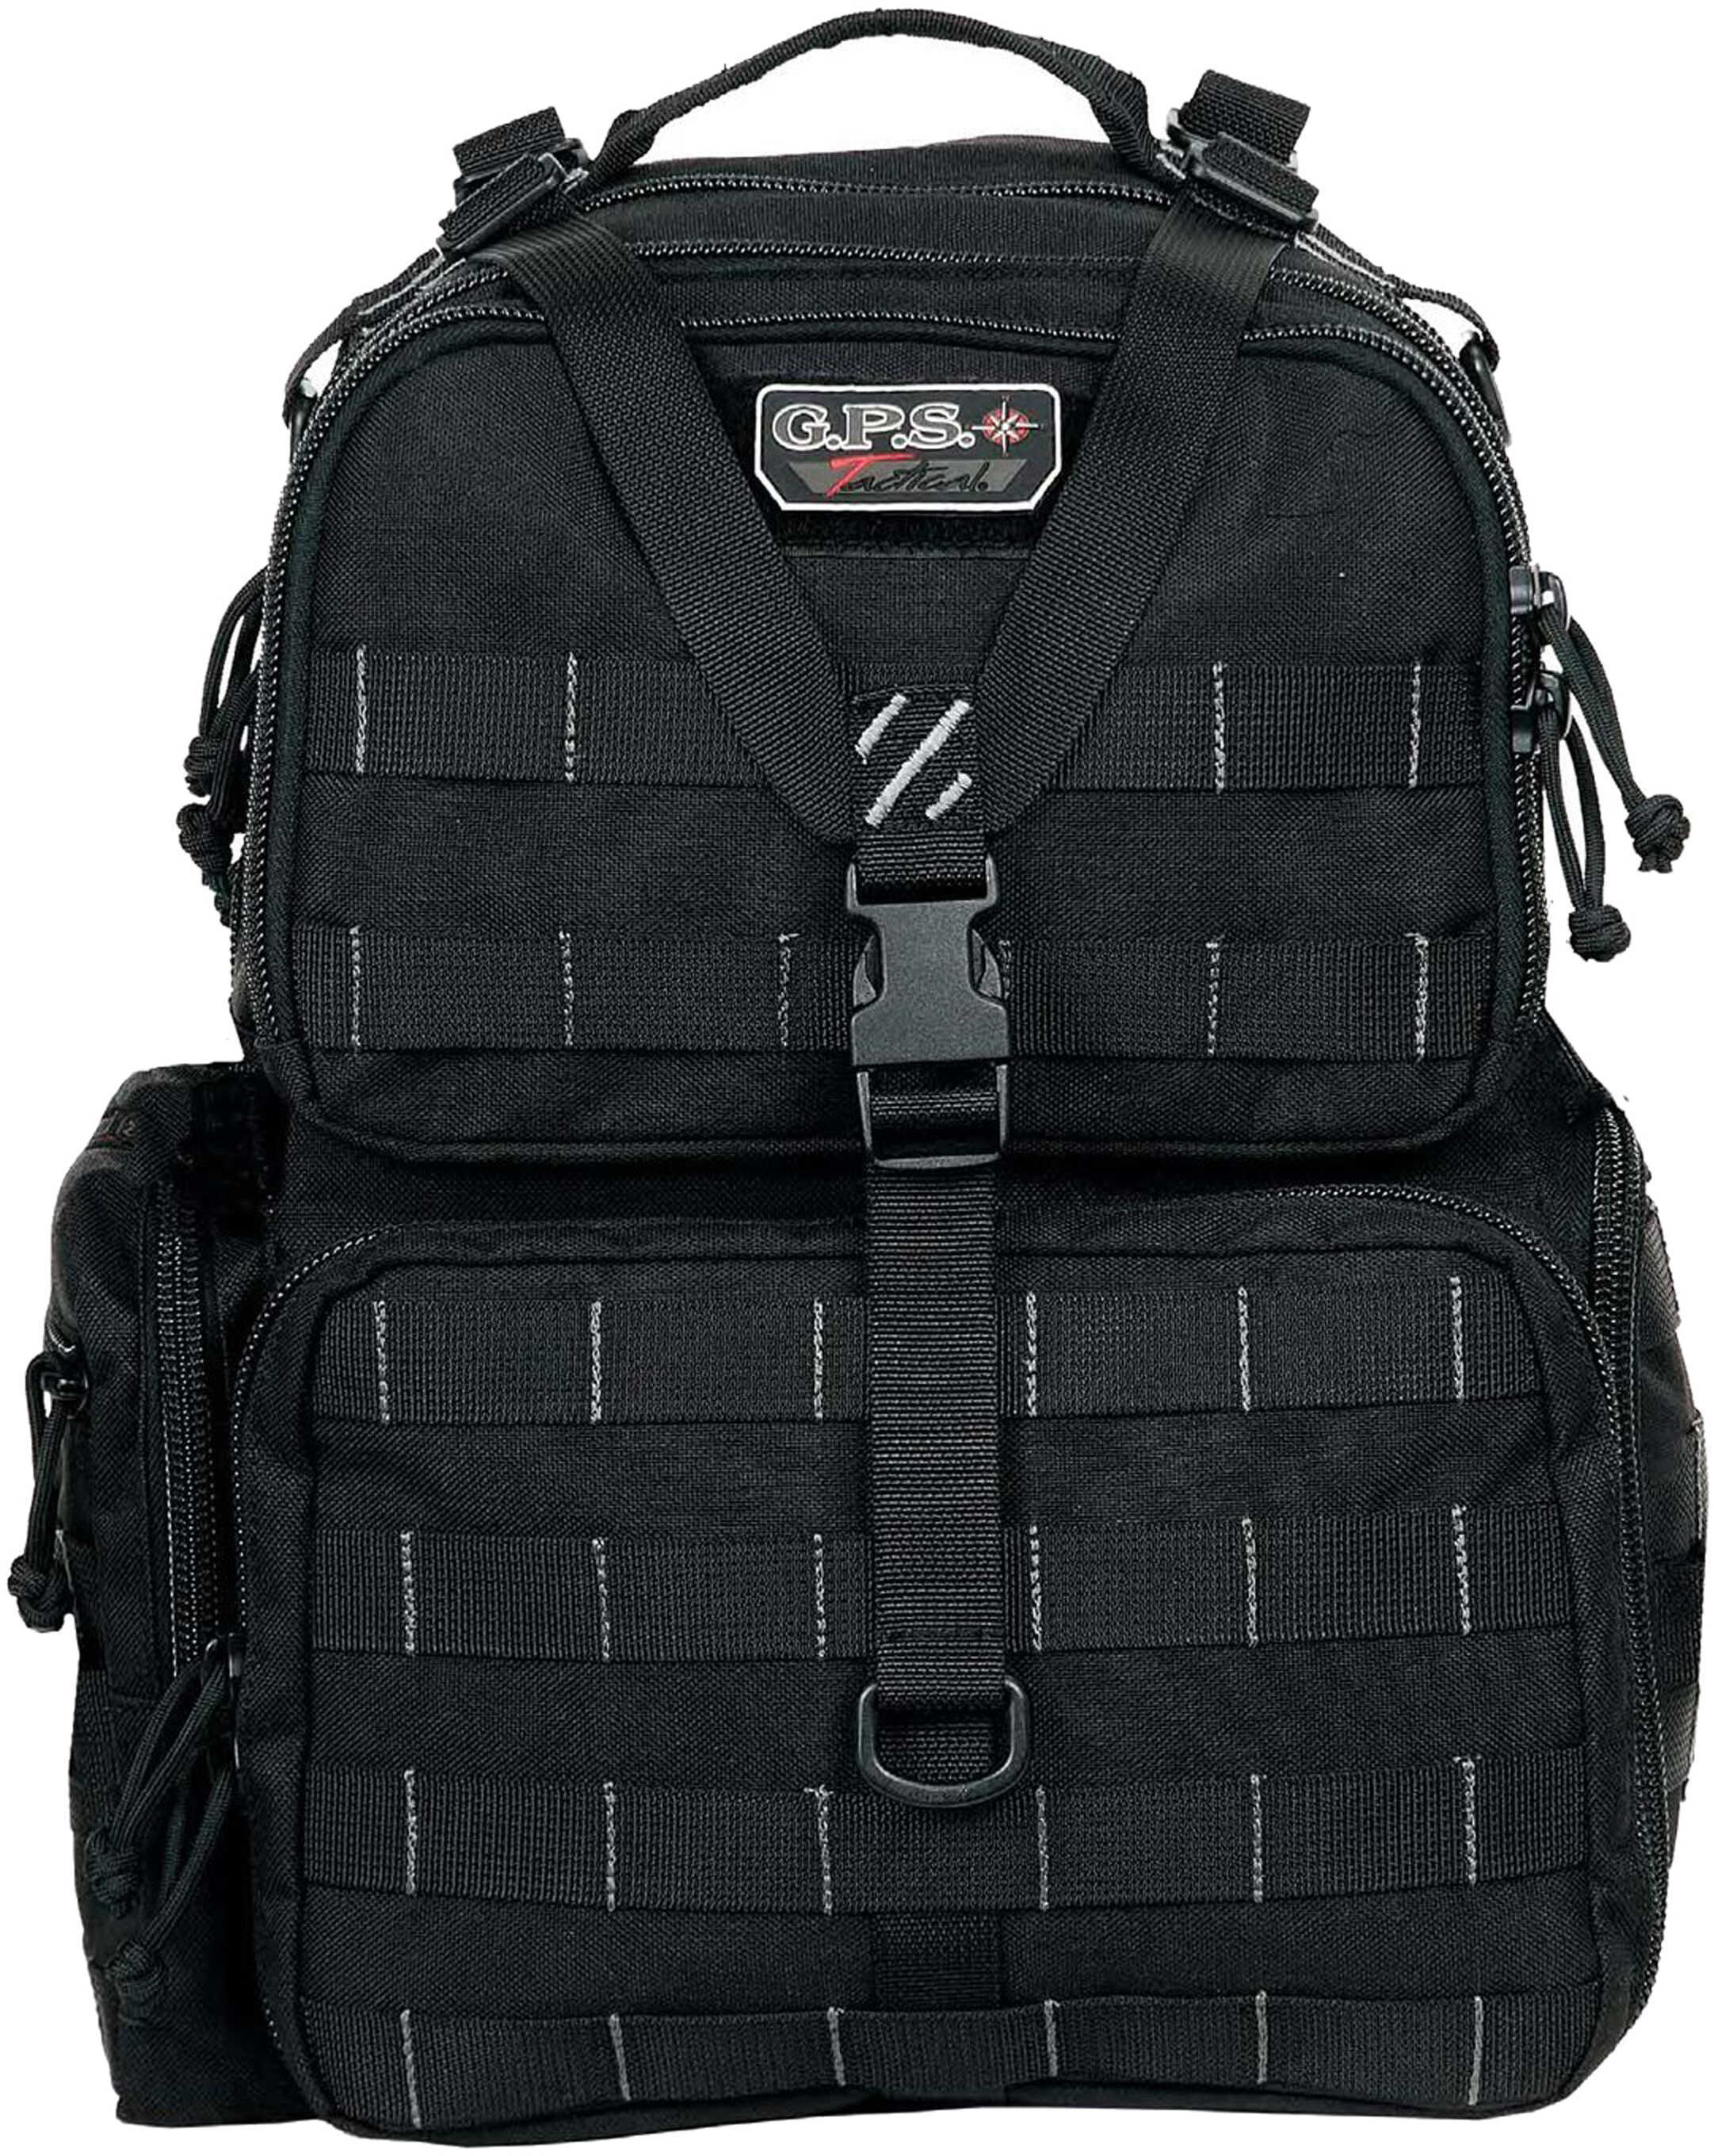 G.P.S. Tactical Range Backpack W/Waist Strap Black Nylon-img-1